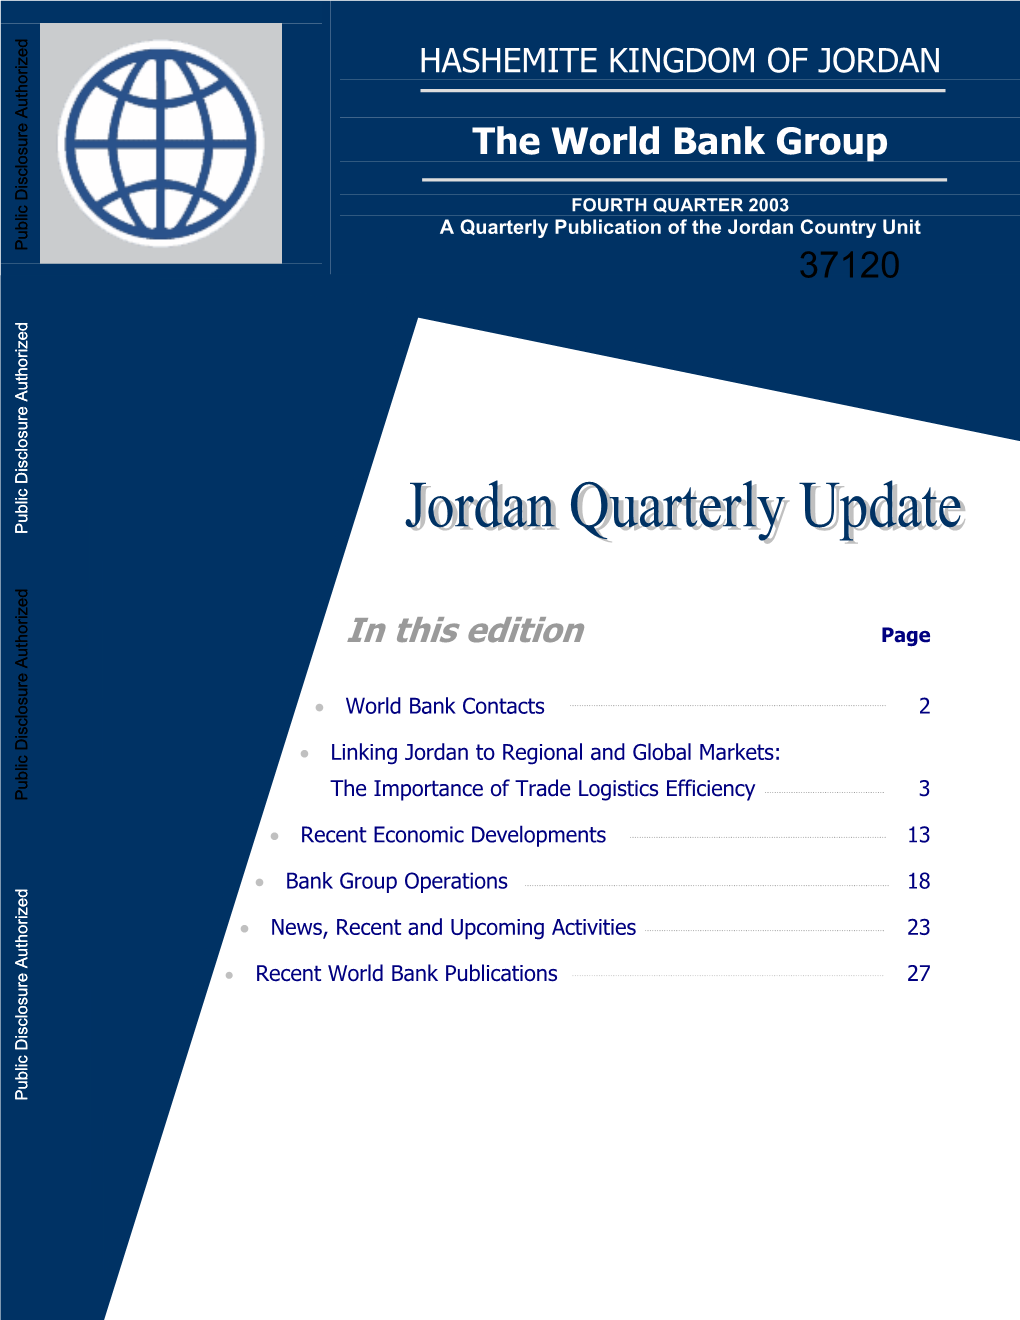 Recent World Bank Publications 27 Public Disclosure Authorized Hashemite Kingdom of Jordan Update